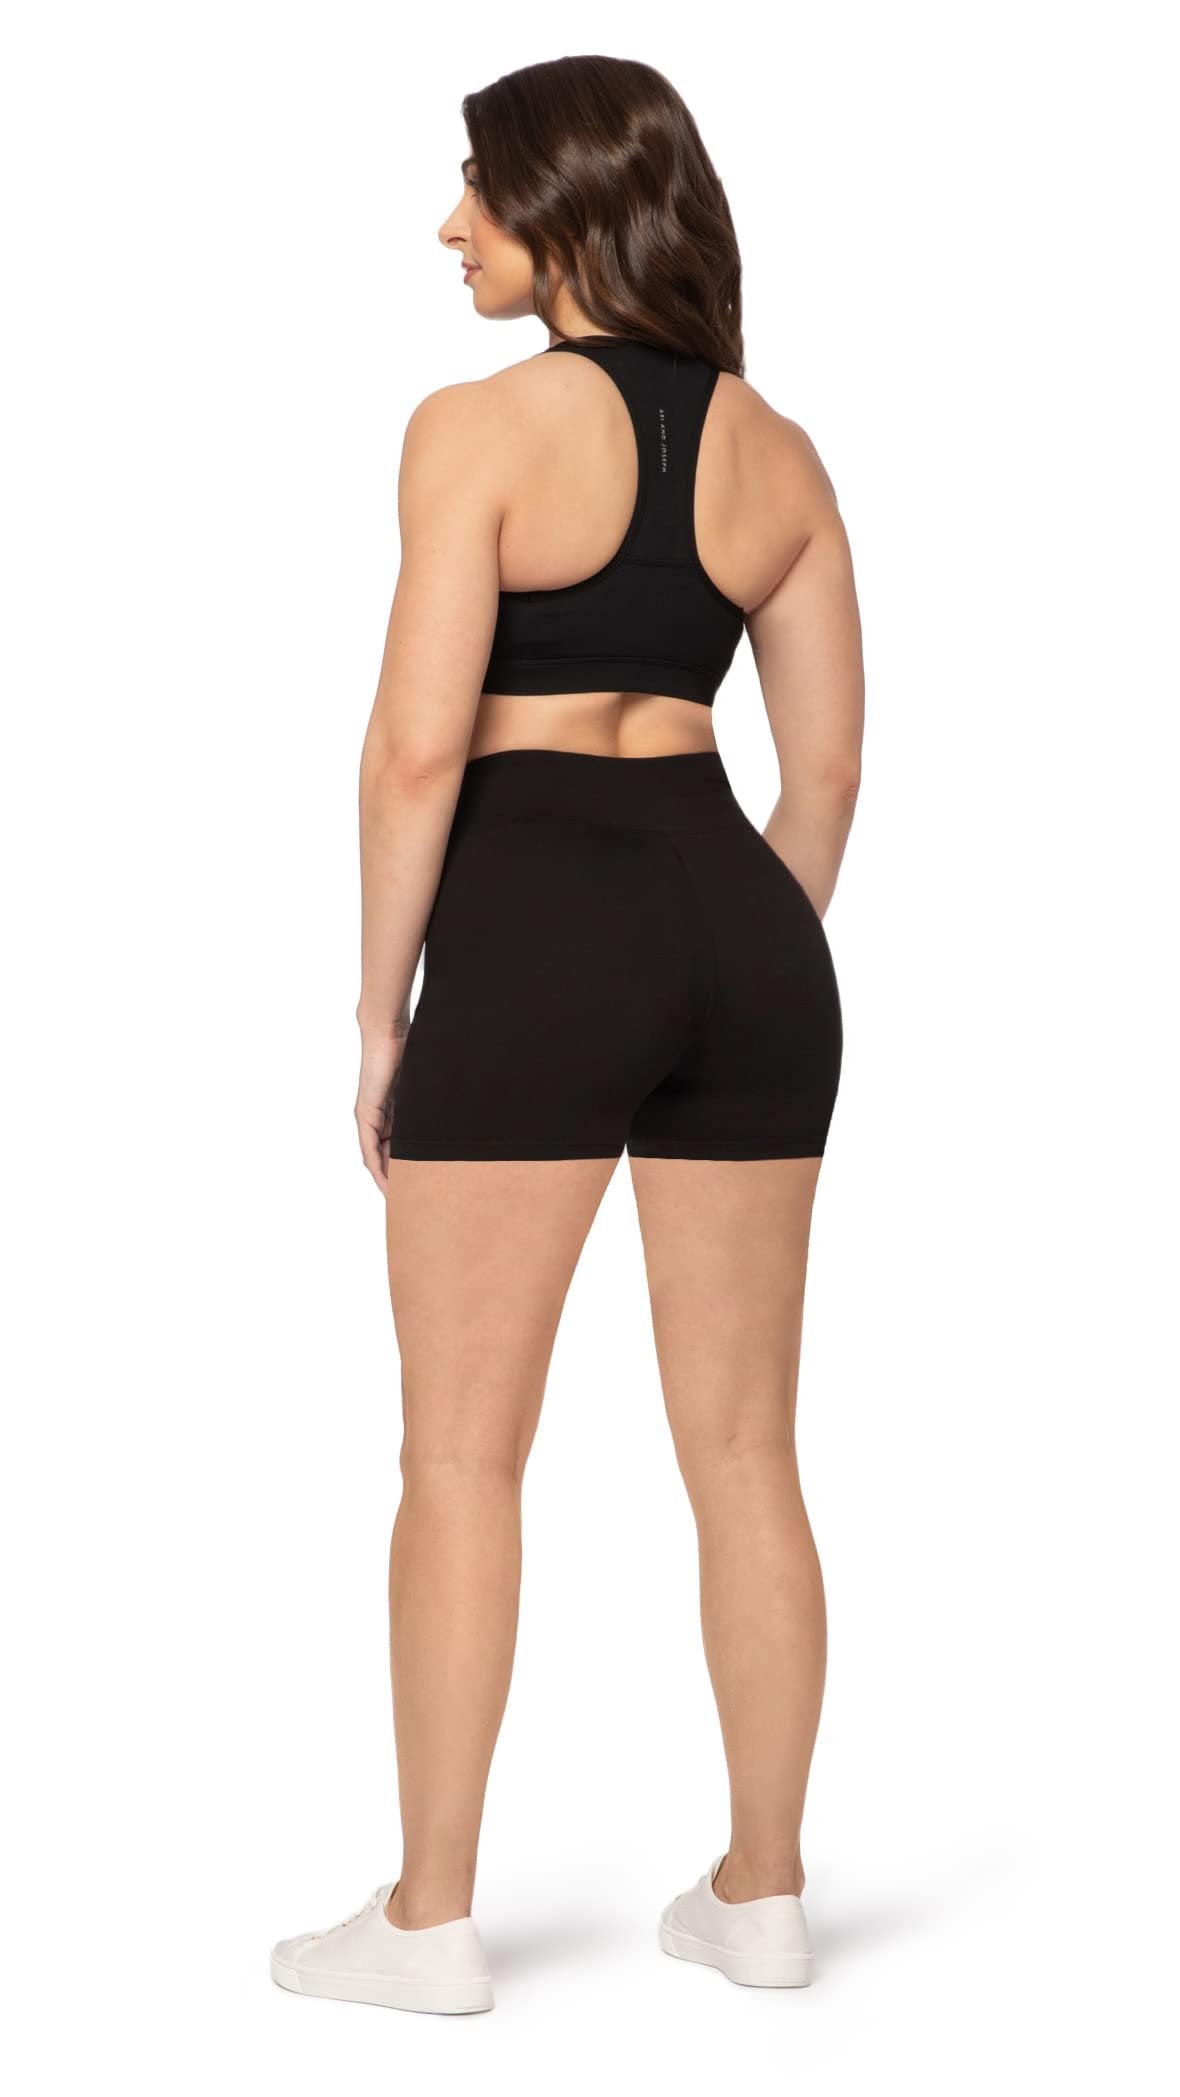 SATINA Biker Shorts for Women - High Waist Biker Shorts Without Pockets - Yoga Shorts for Regular & Plus Size Women (5-Inch, Medium, Black Shorts)